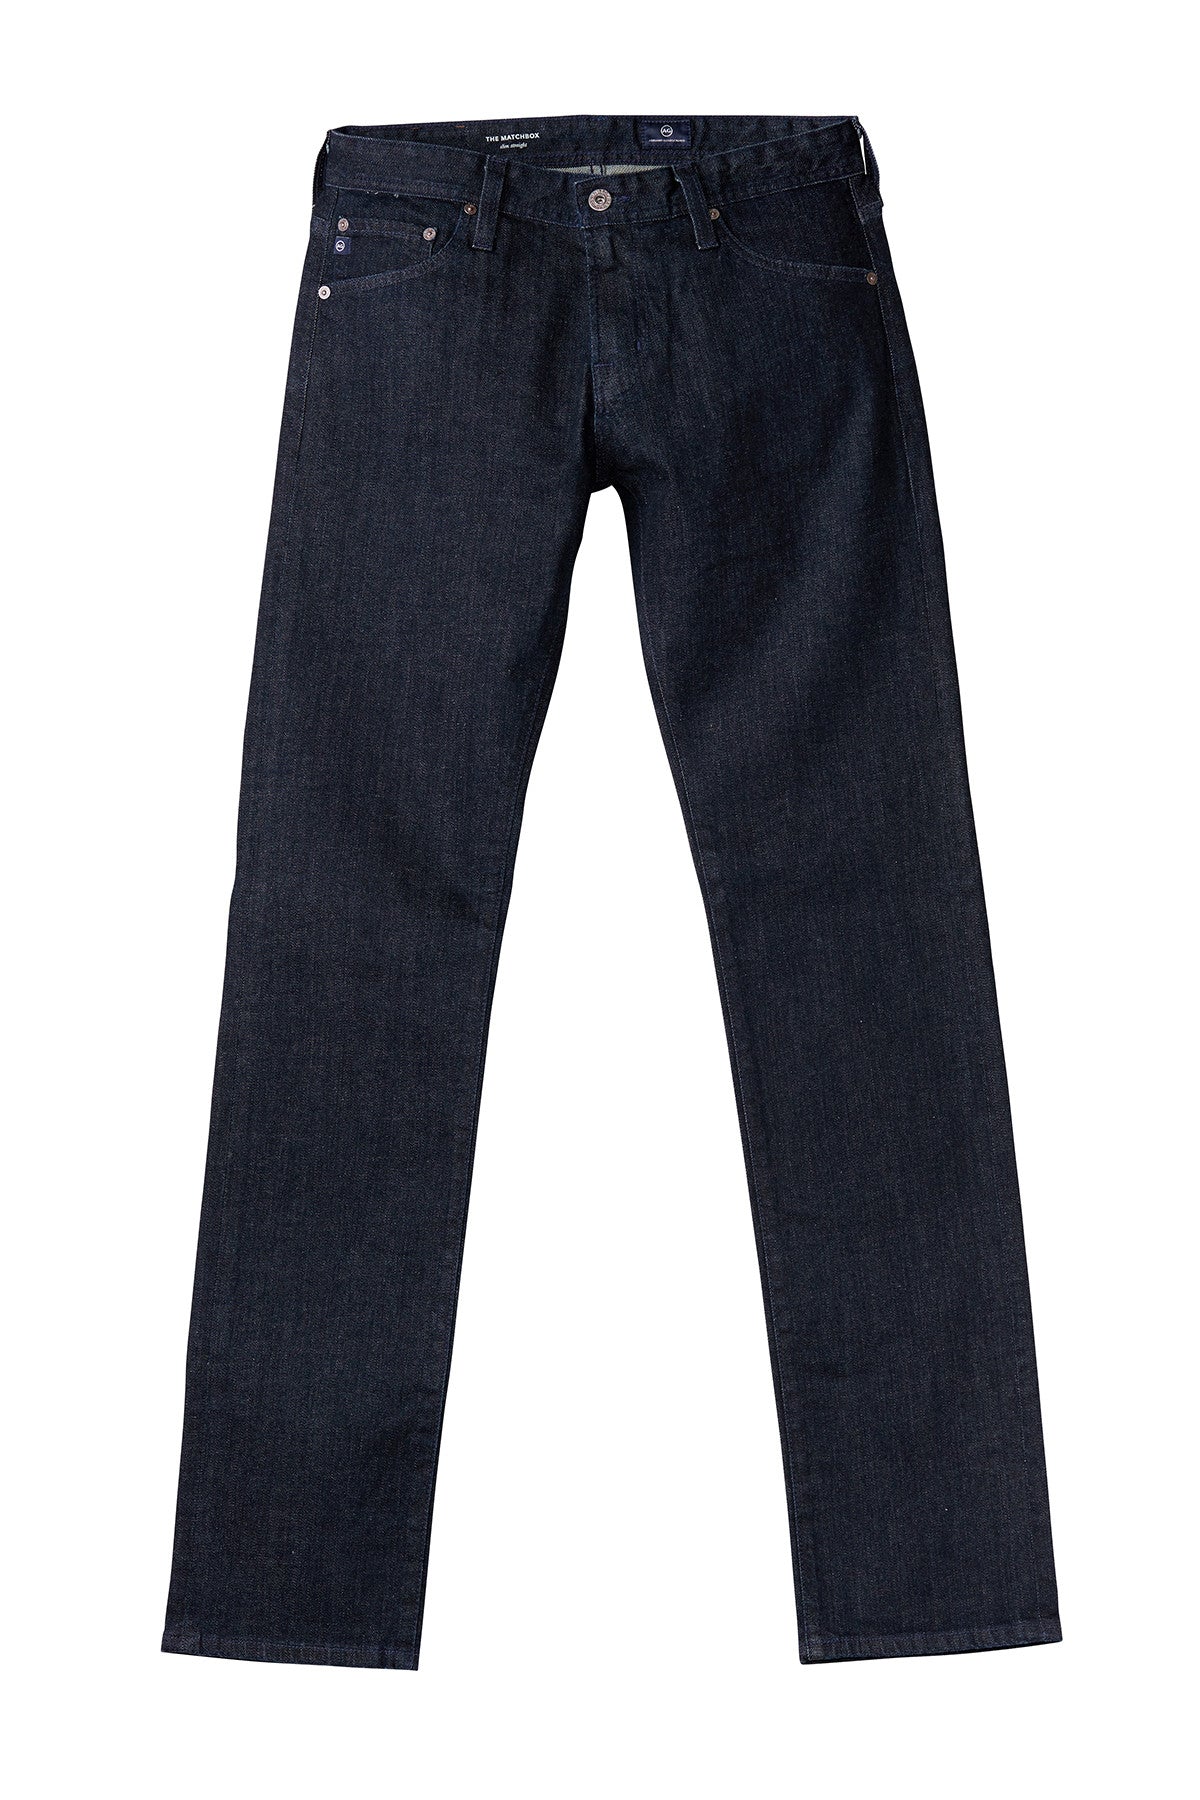 David August | AG 'Matchbox' Men's Slim Fit Dark Wash Jeans